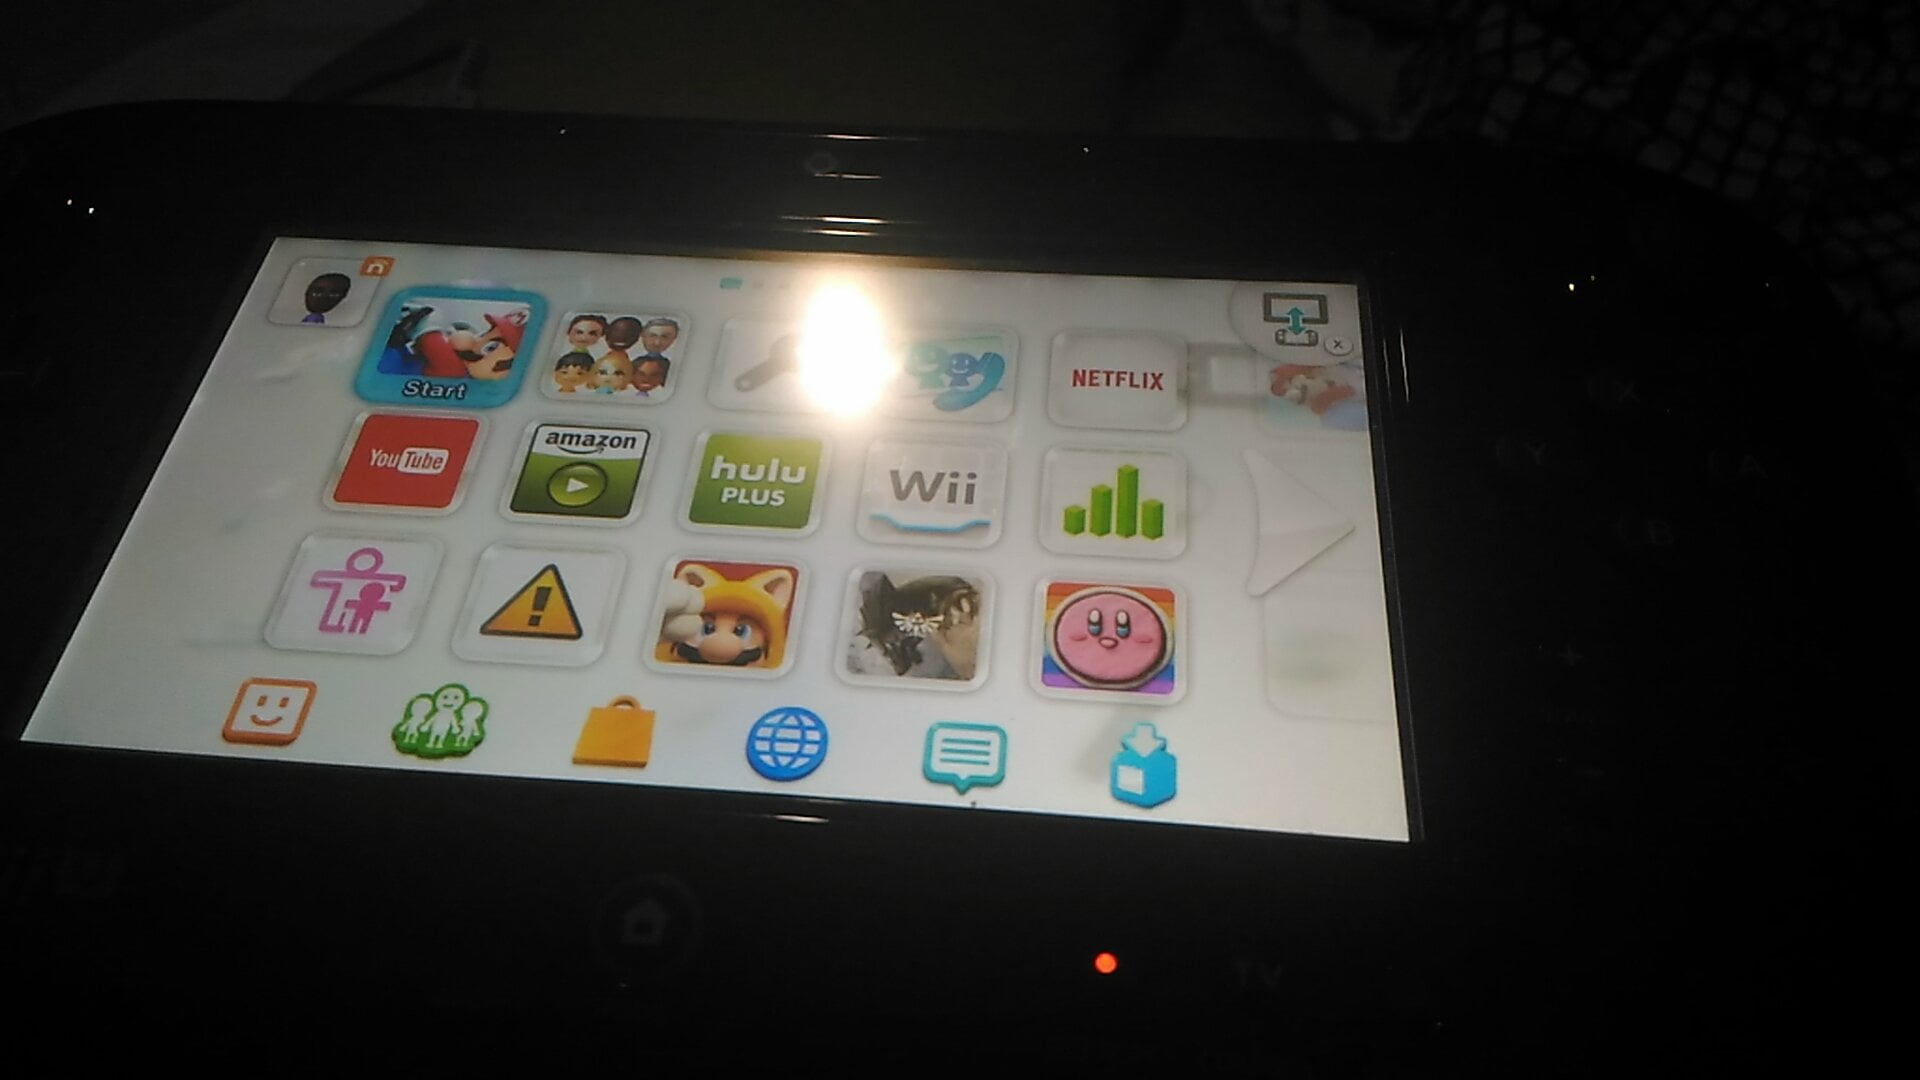 Download Wii U Games / Updates For USB Y Mod Install Using Wii U USB Helper